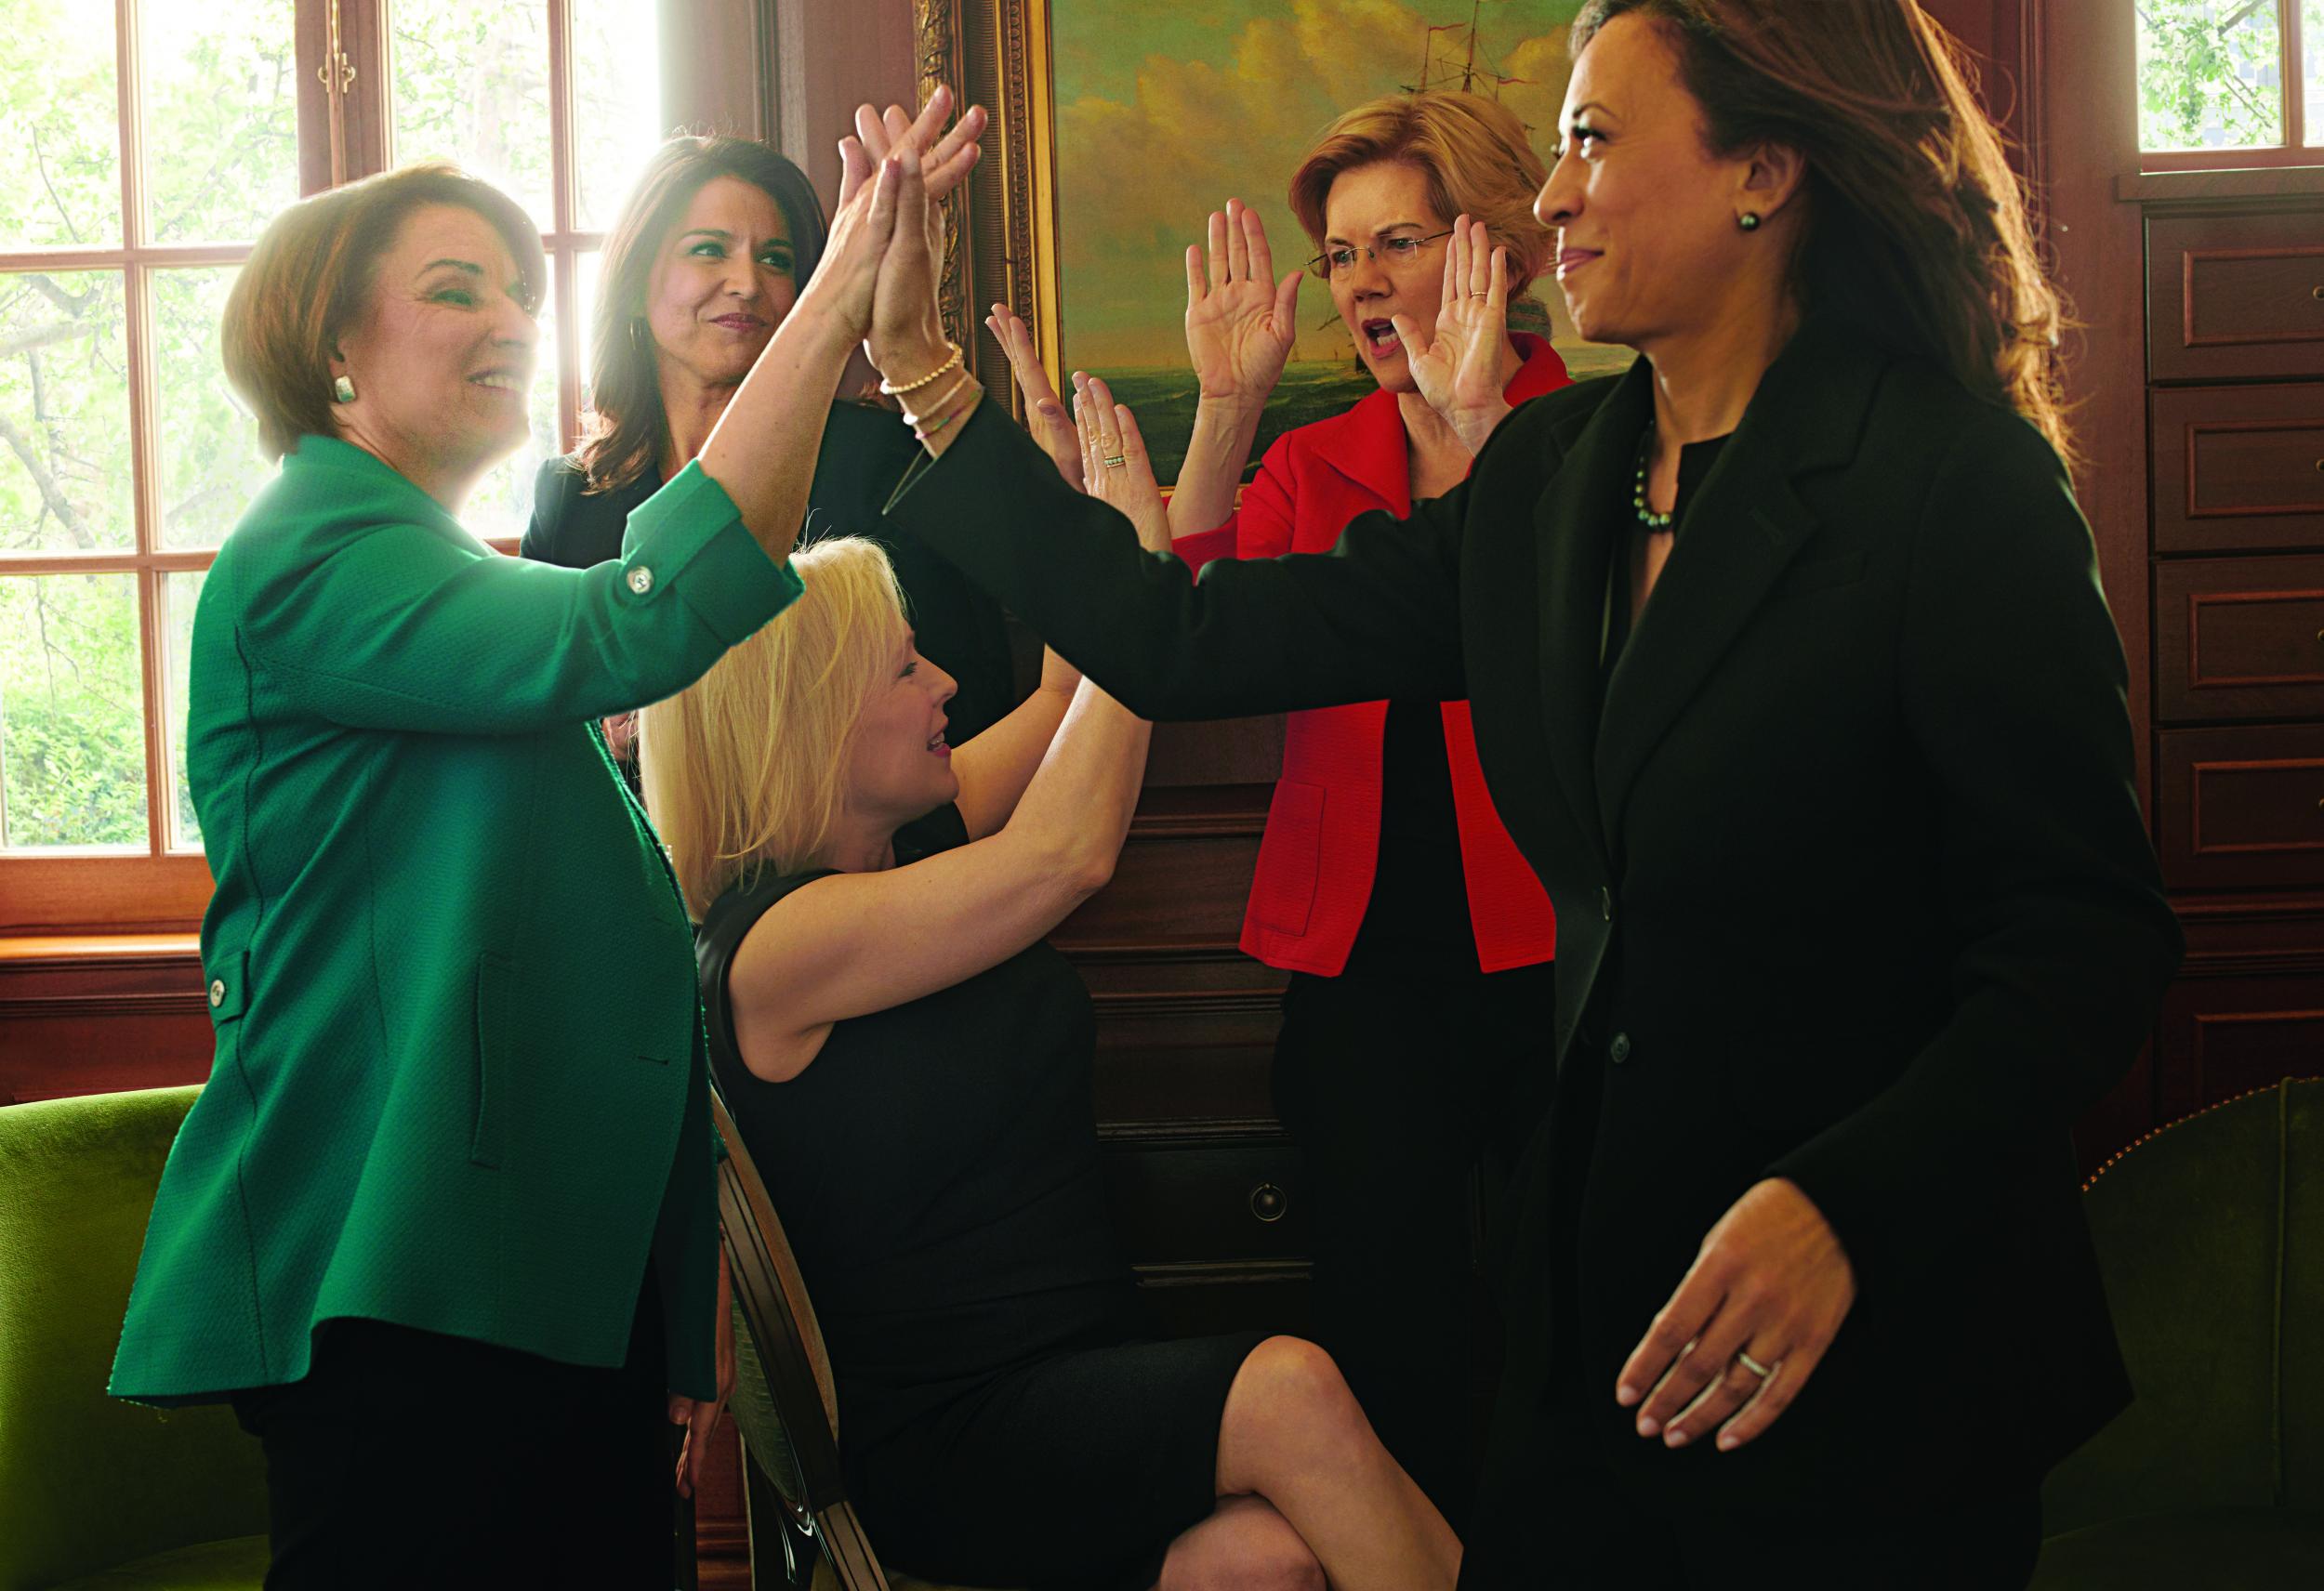 The five presidential candidates high five in image captured by portrait photographer Annie Leibovitz (Annie Leibovitz/Vogue)